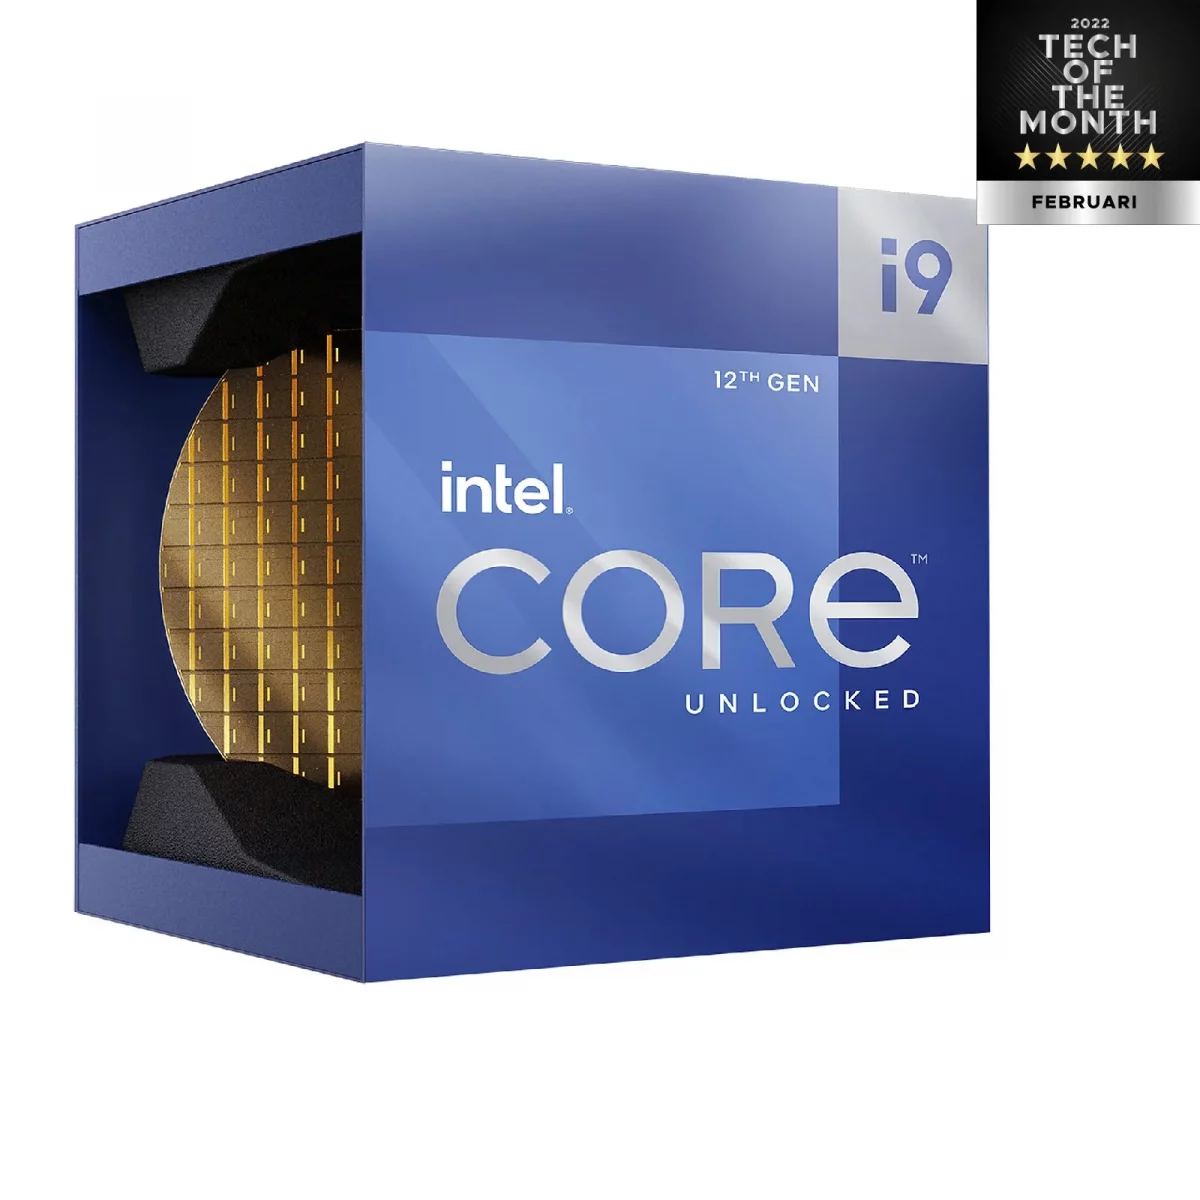 intel core i9 tech of the month feb 2022